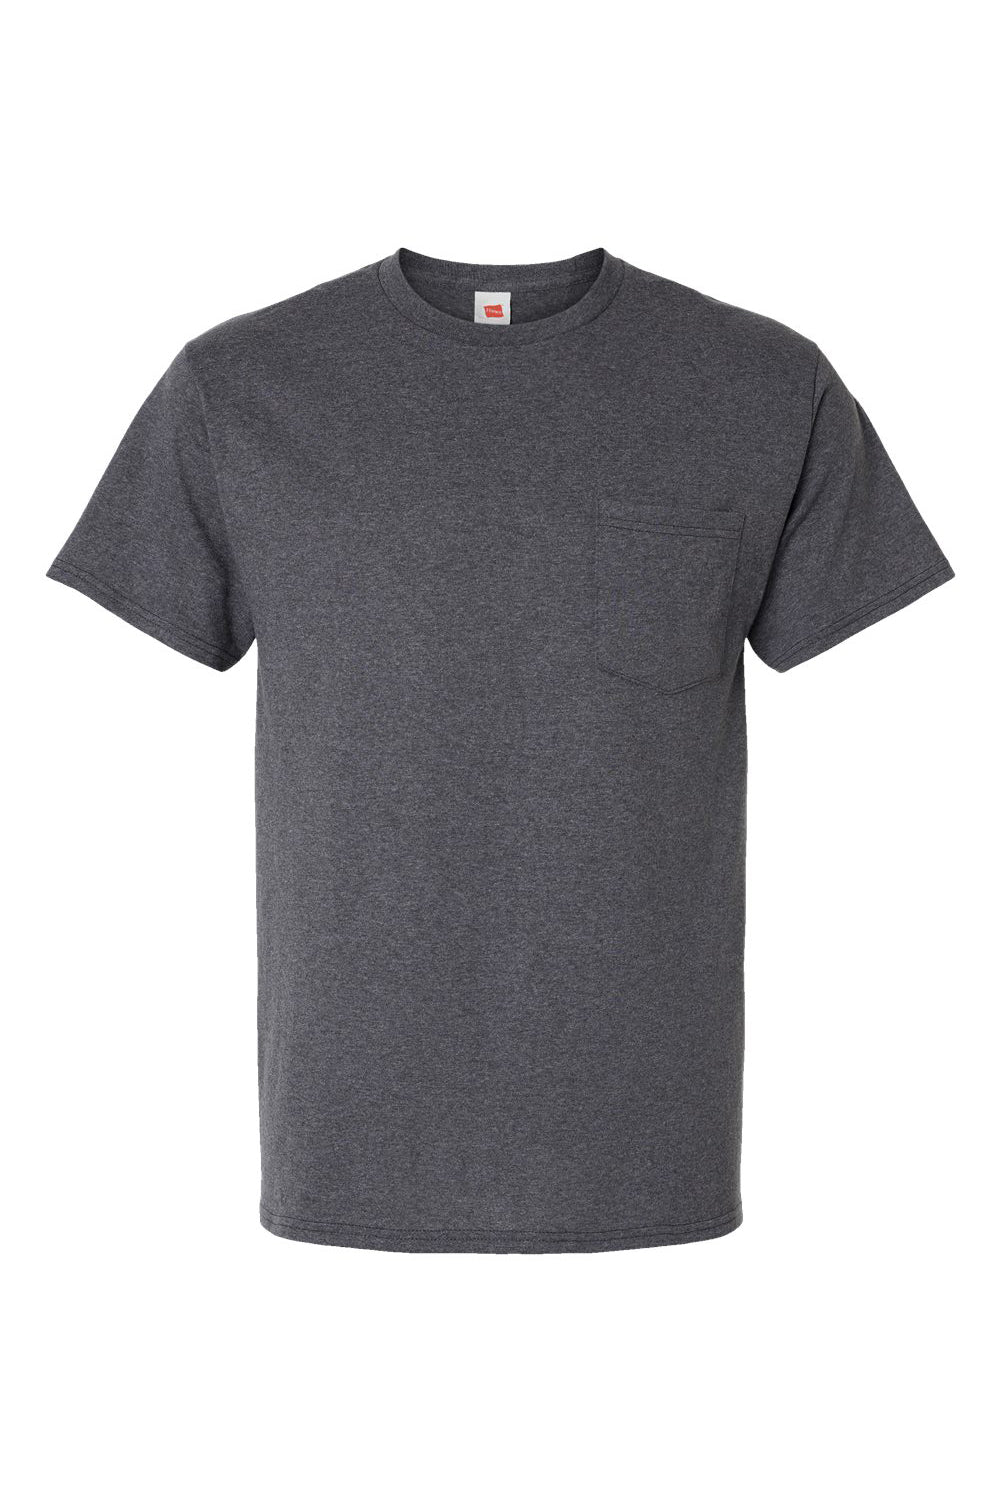 Hanes 5290P Mens Essential Short Sleeve Crewneck T-Shirt w/ Pocket Heather Charcoal Grey Flat Front